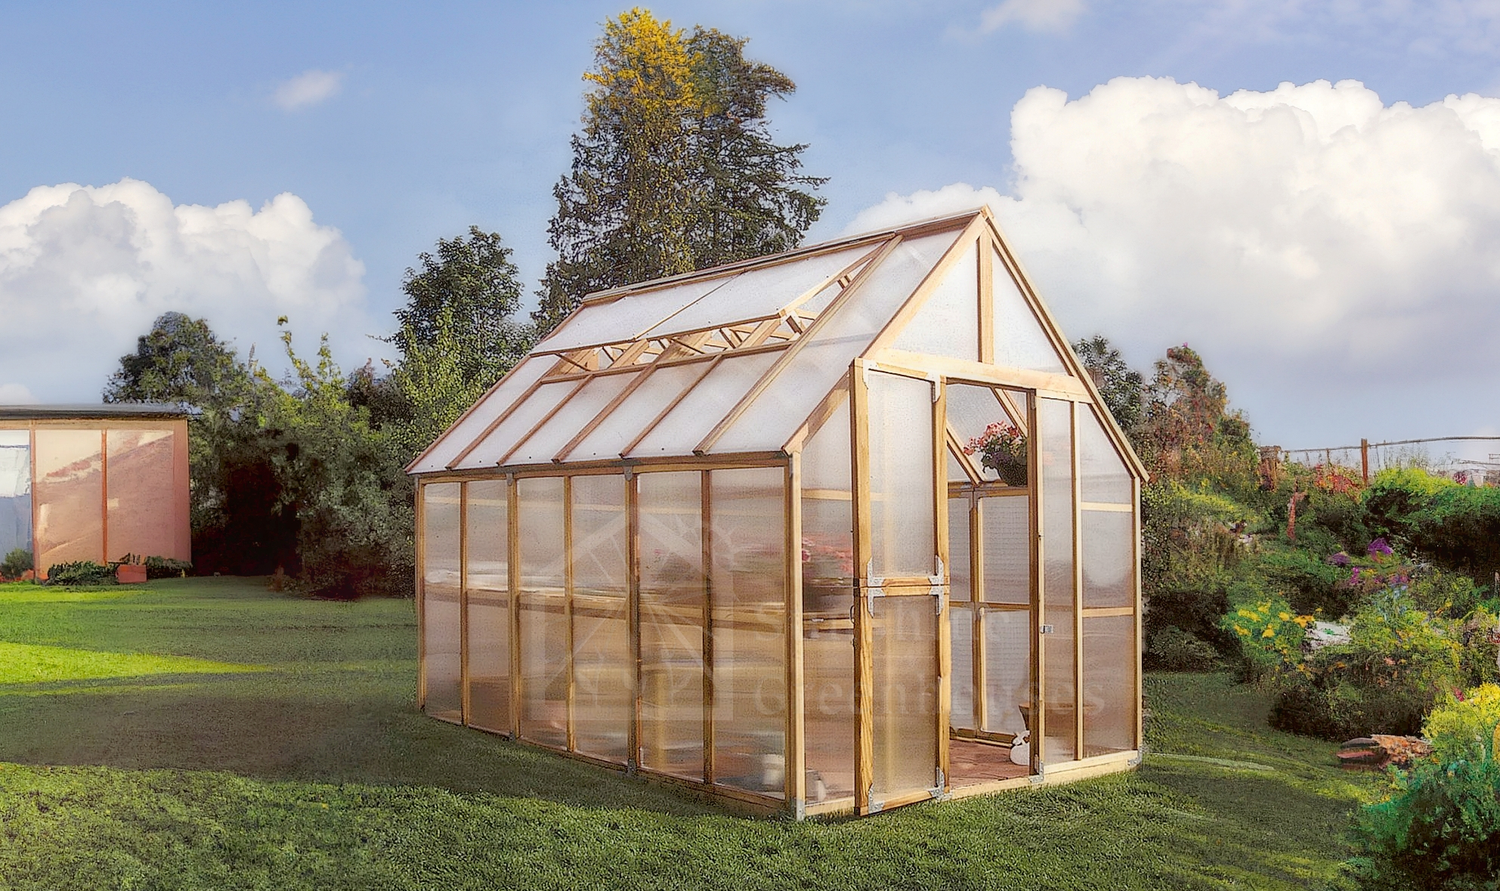 sunshine greenhouse kits - american made redwood hobby greenhouses